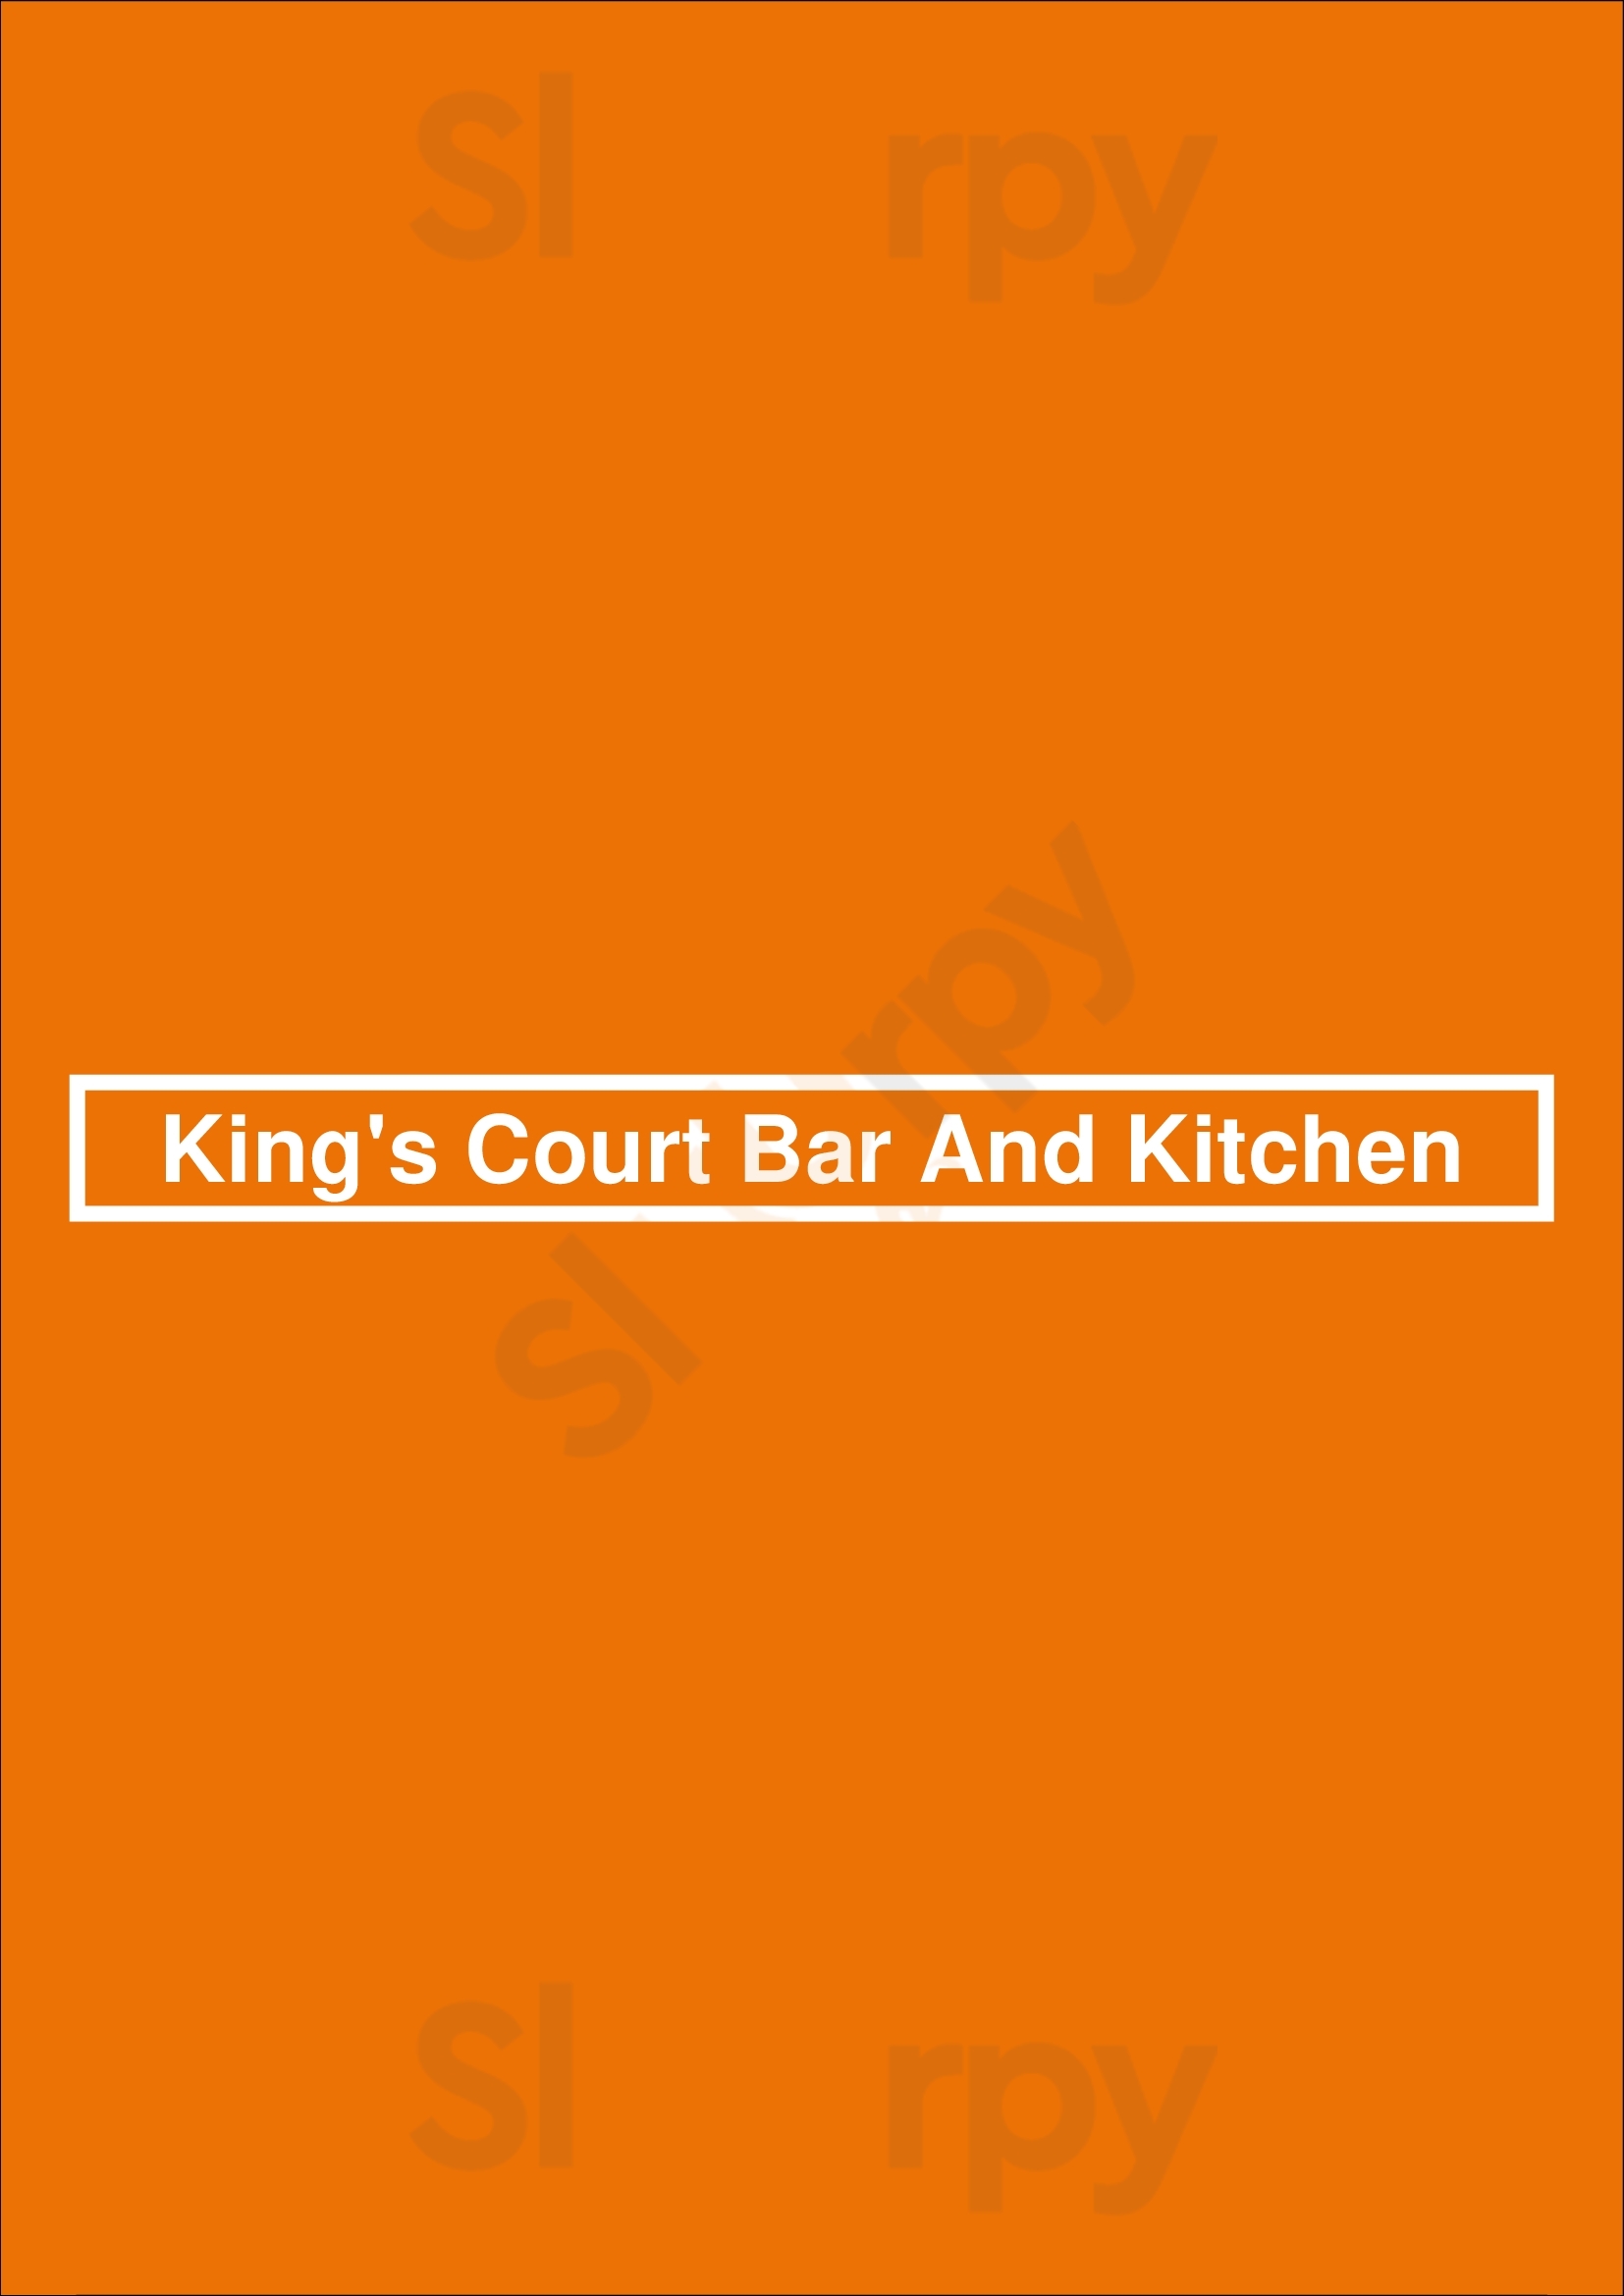 King's Court Bar And Kitchen Houston Menu - 1